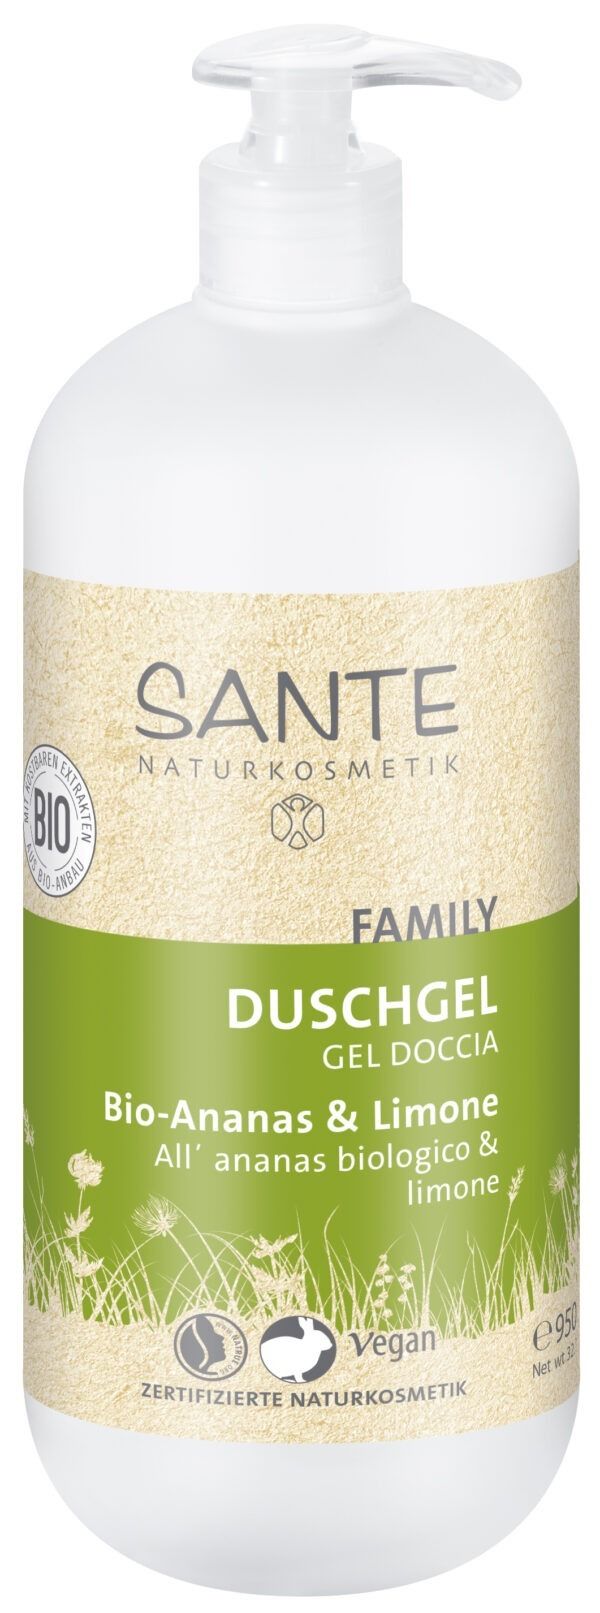 Sante FAMILY Duschgel Bio-Ananas&Limone 4 x 950ml